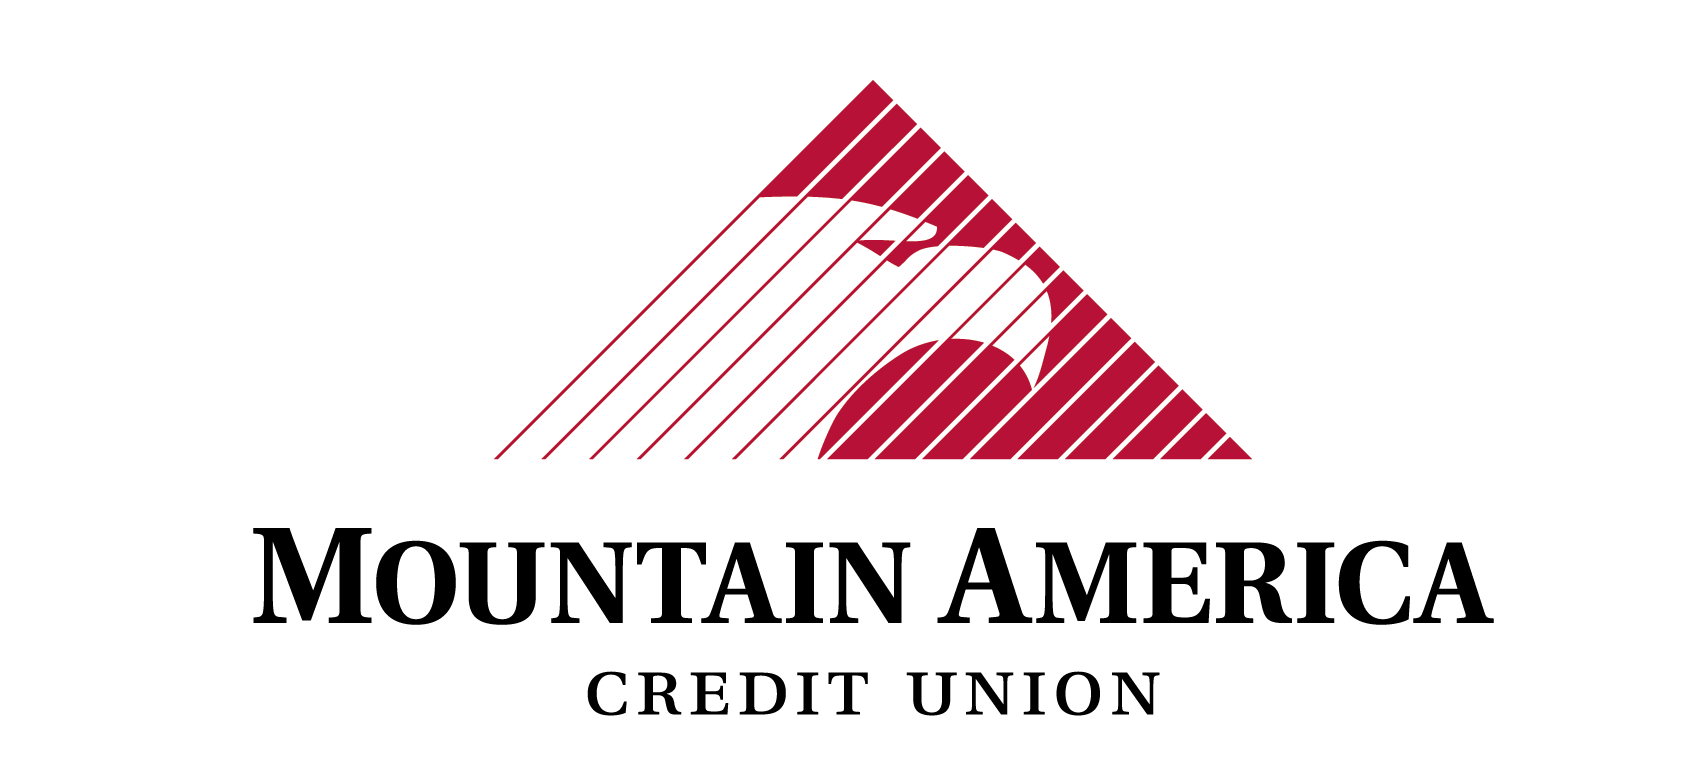 Mountain America Credit Union logo